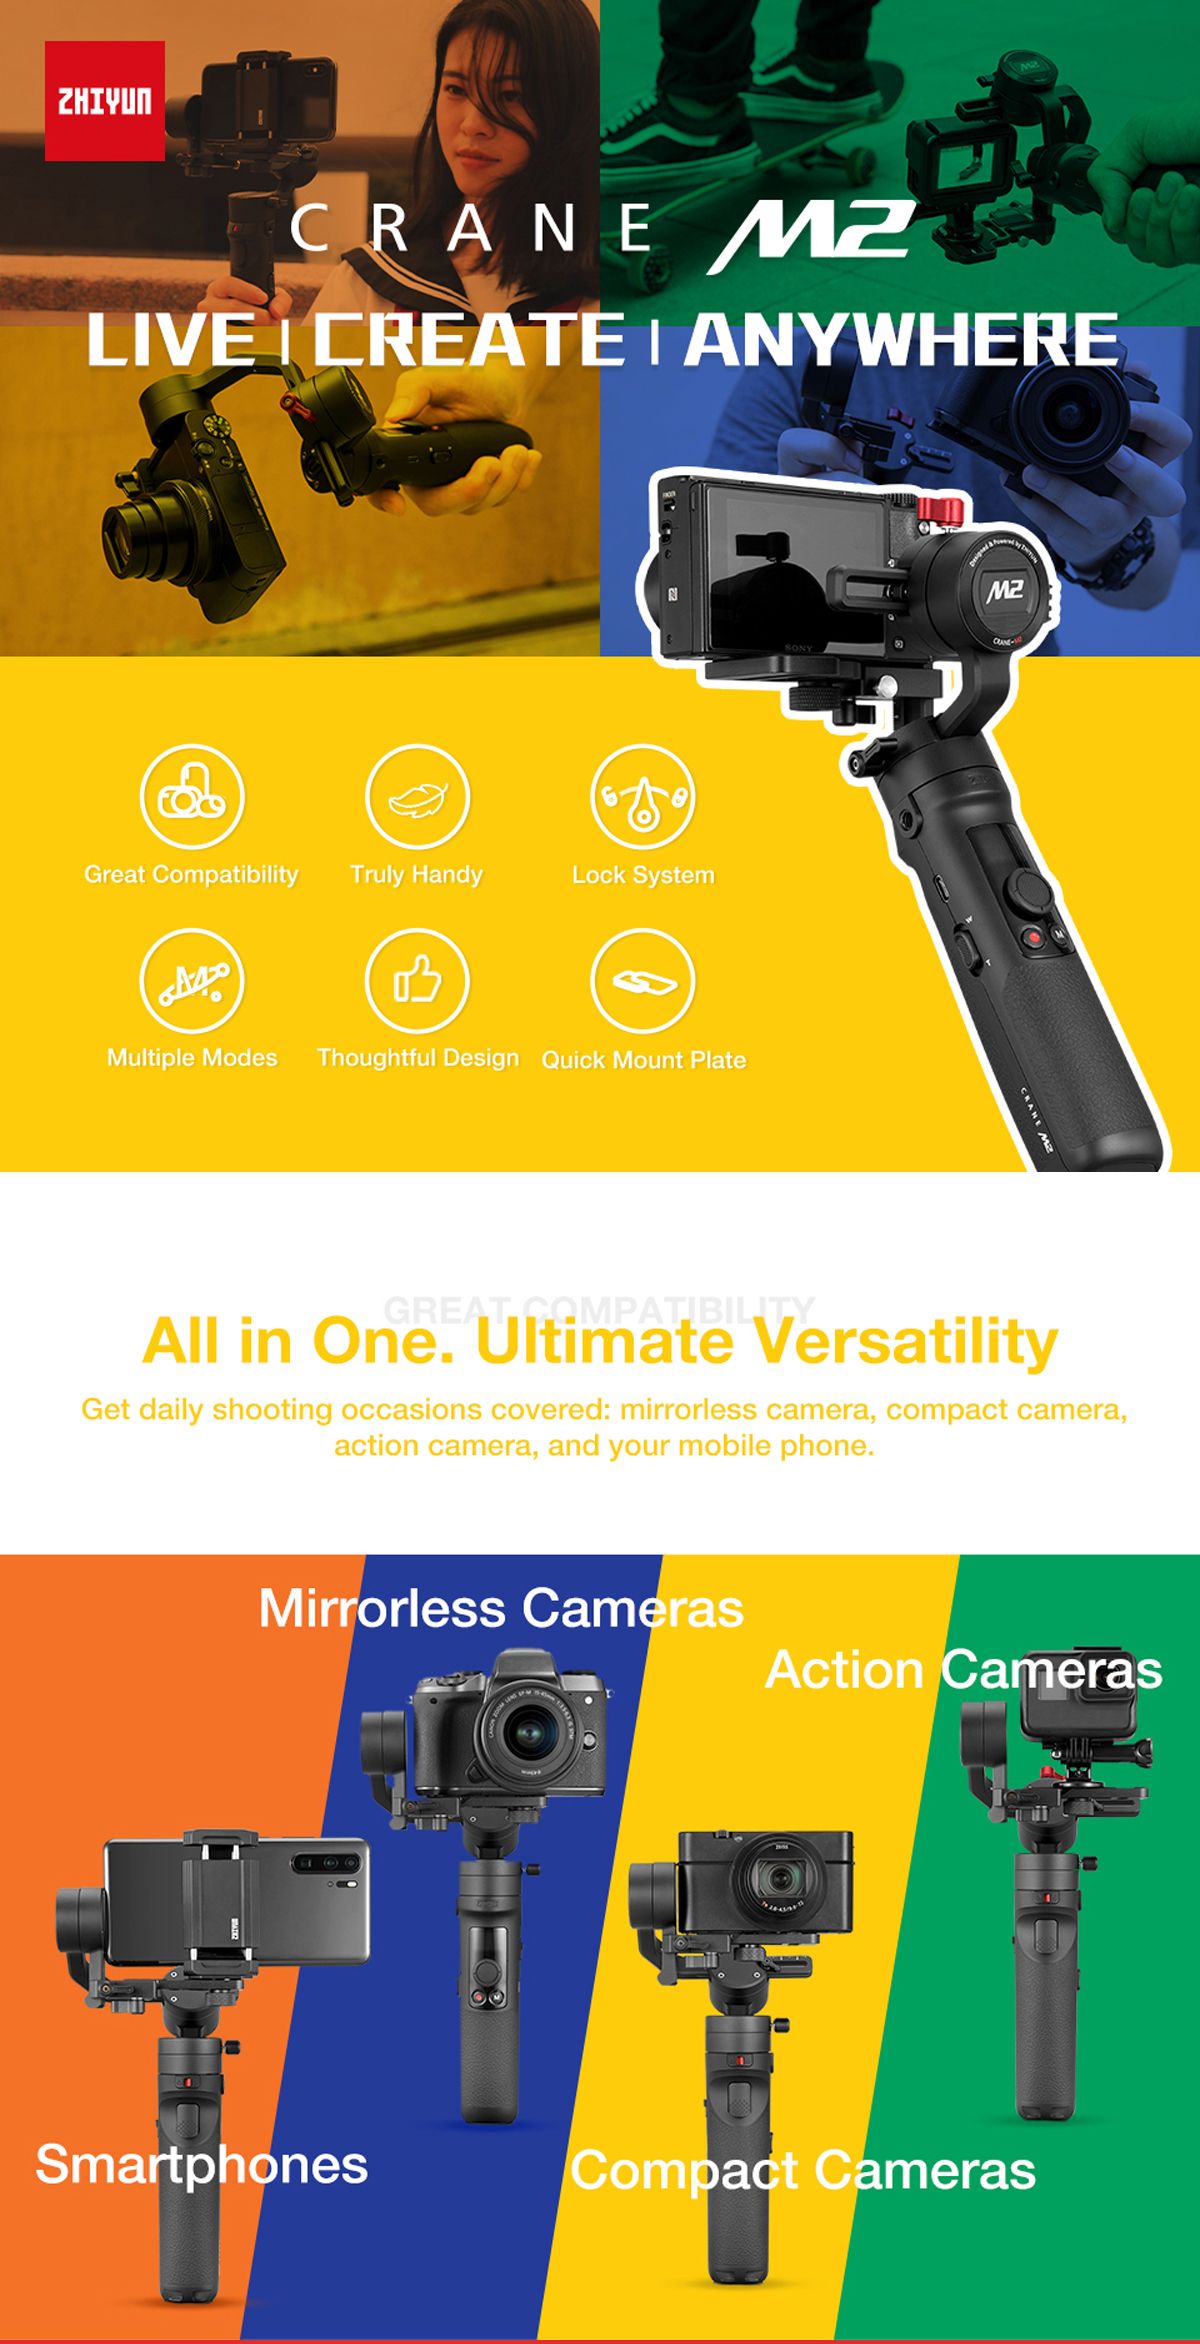 ZHIYUN-Original-Crane-M2-Gimbals-for-Smartphones-Mirrorless-Compact-Action-Camera-Handlebar-Stabiliz-1542552